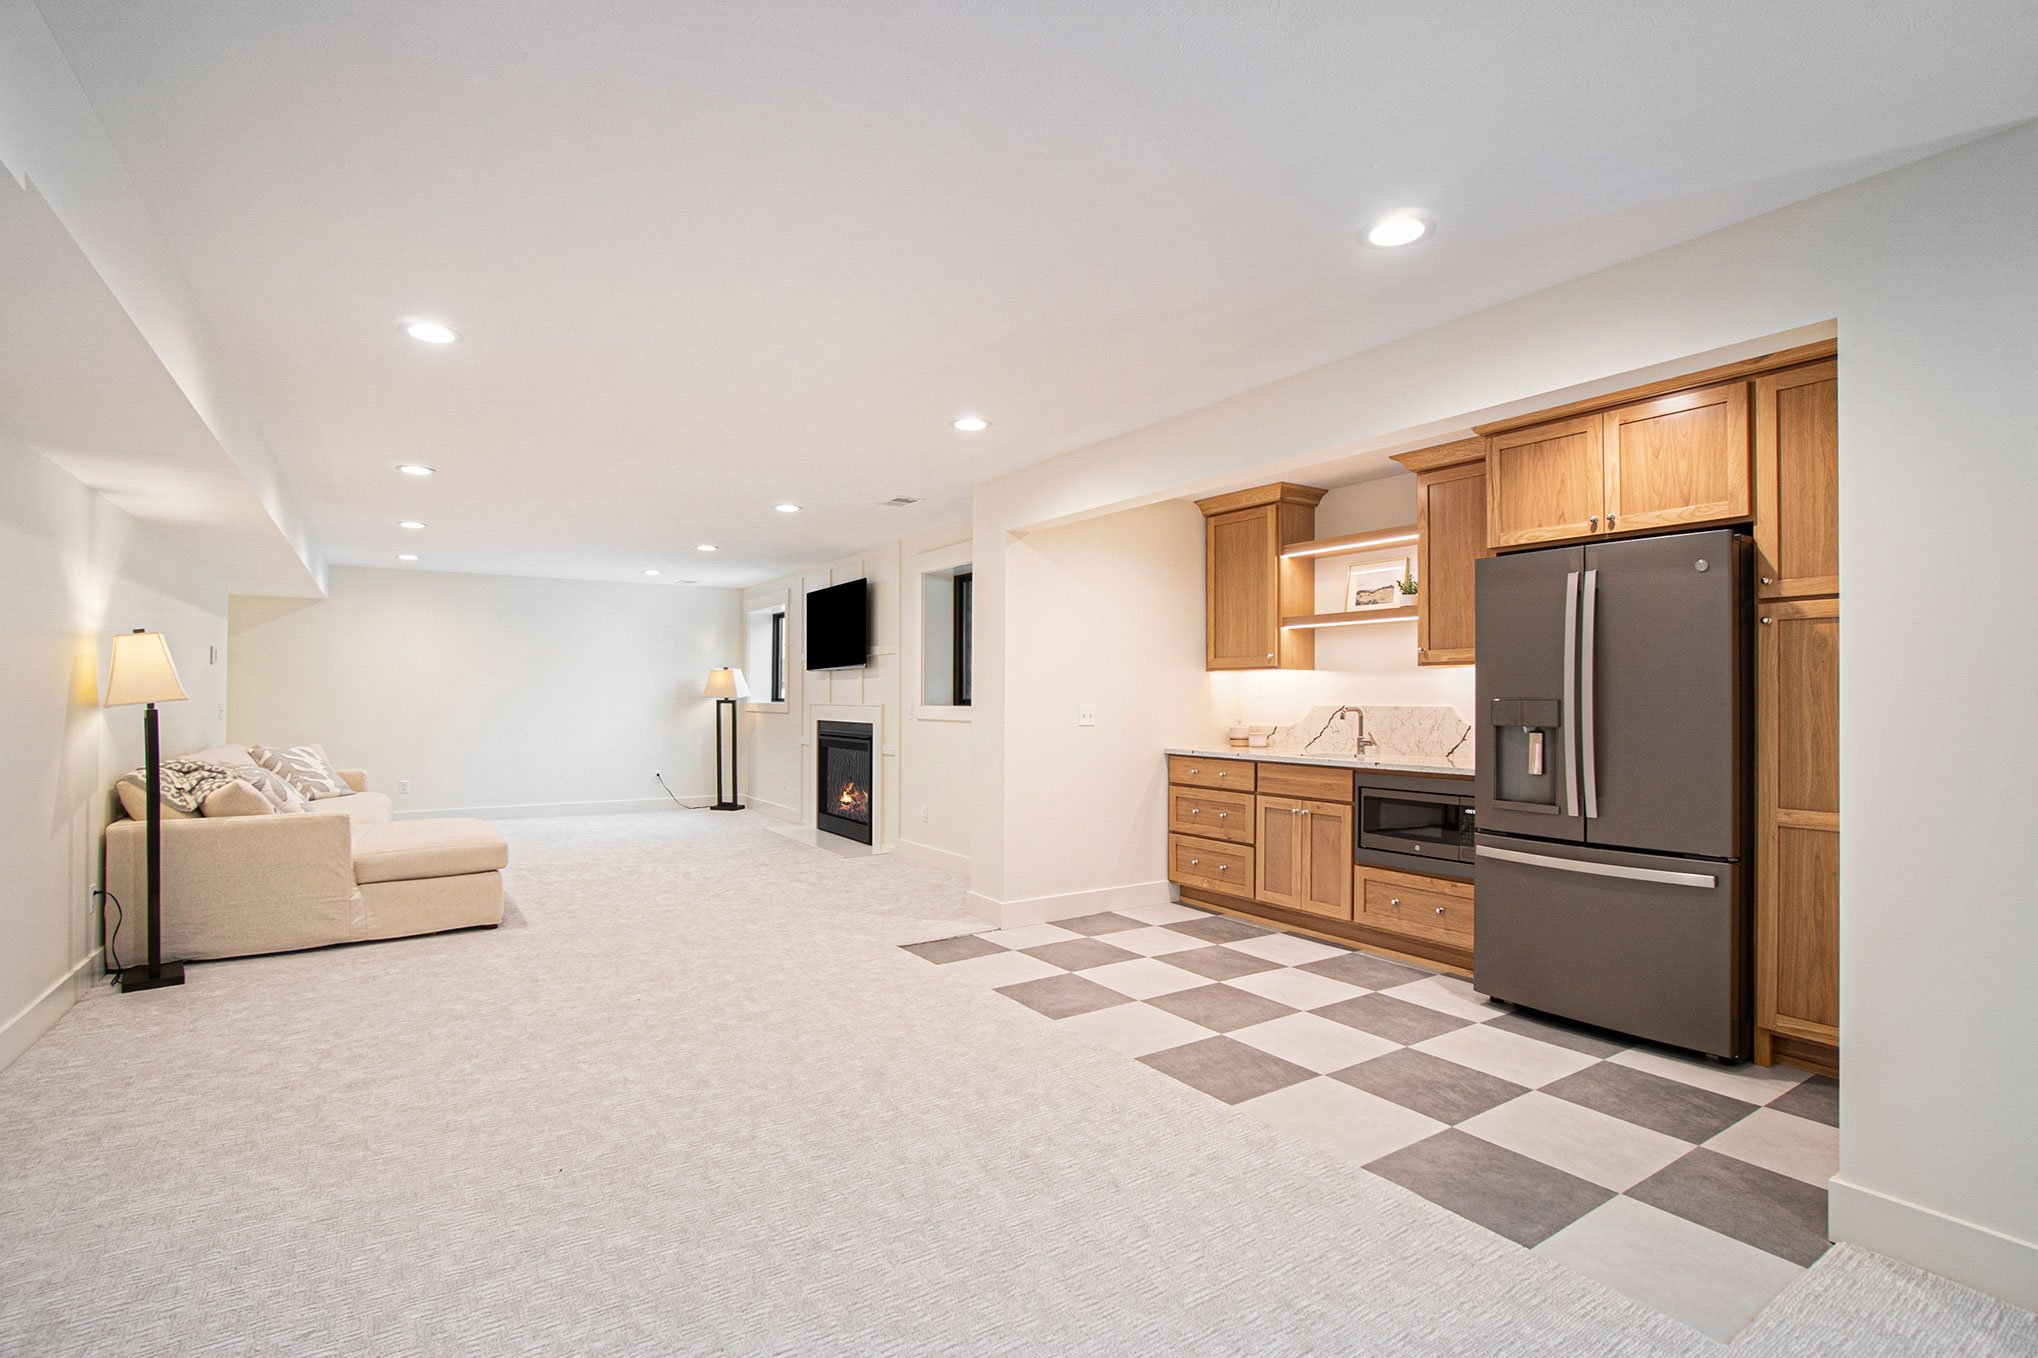 basement kitchenette. checkered floor. stained cabinetry. bright basement.jpg